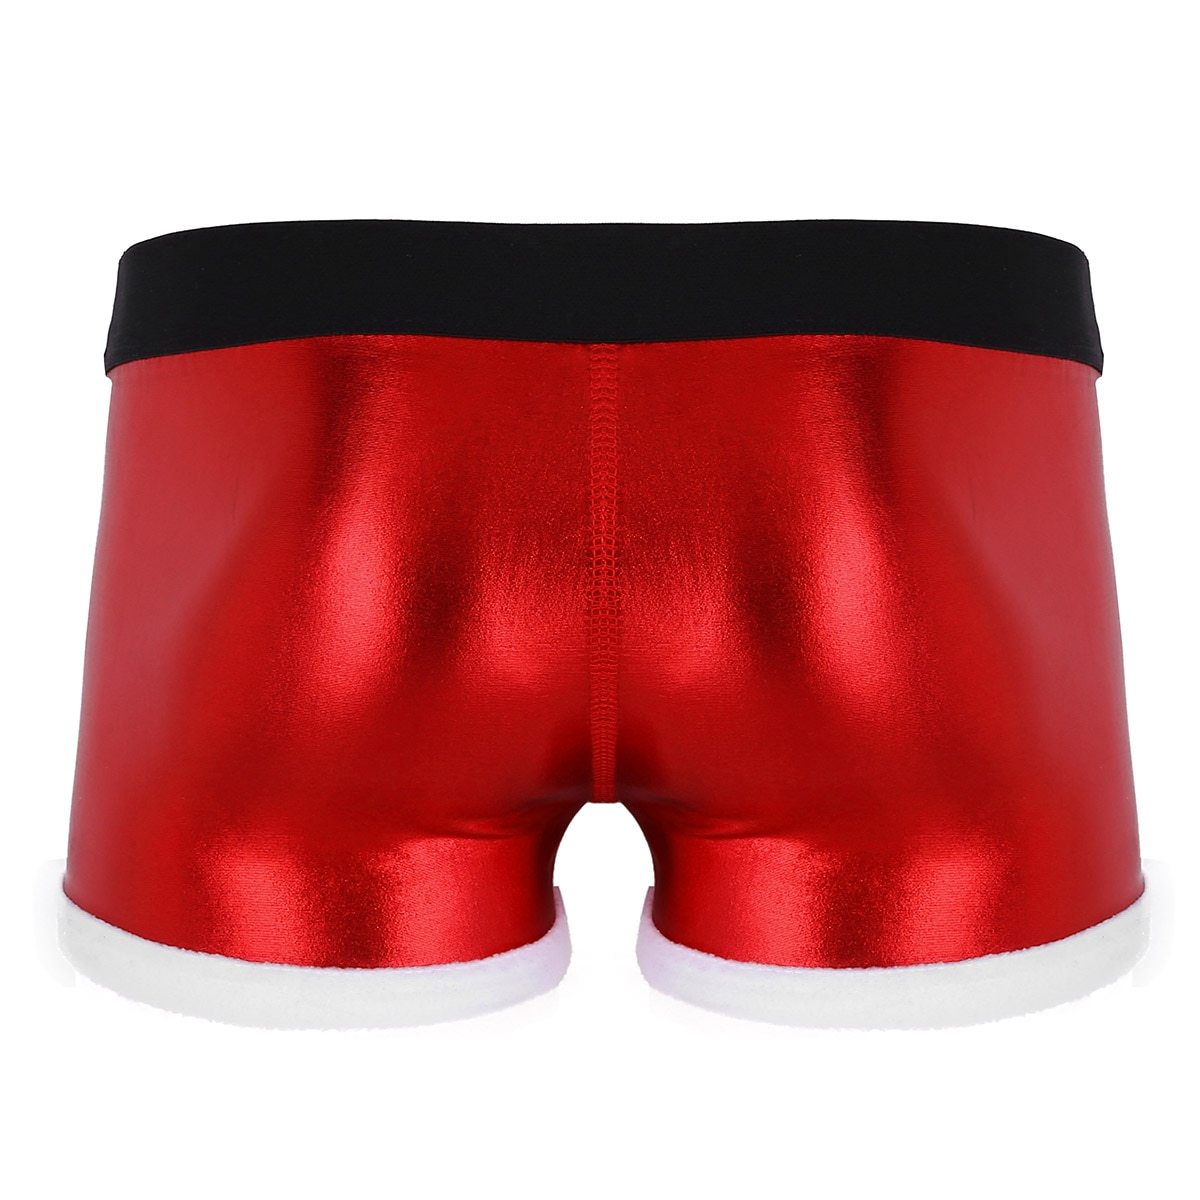 SALE - XMAS GIFT - Mens Glitter Christmas Santa Boxer Shorts with Printed Belt Details